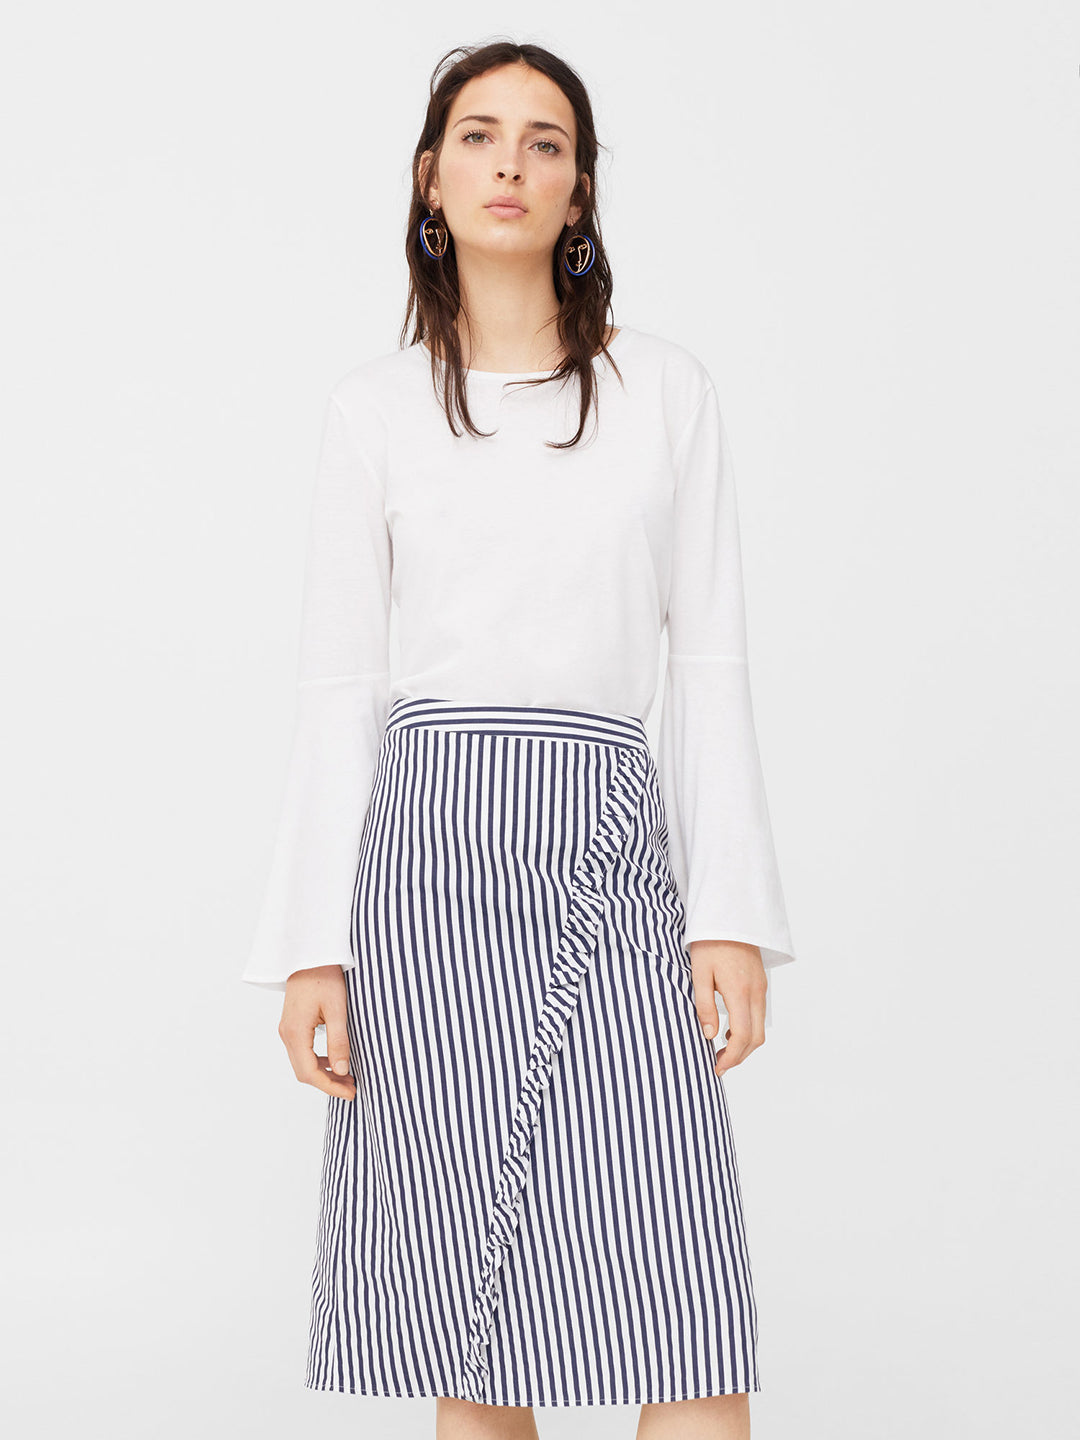 White & Navy Striped A-Line Skirt